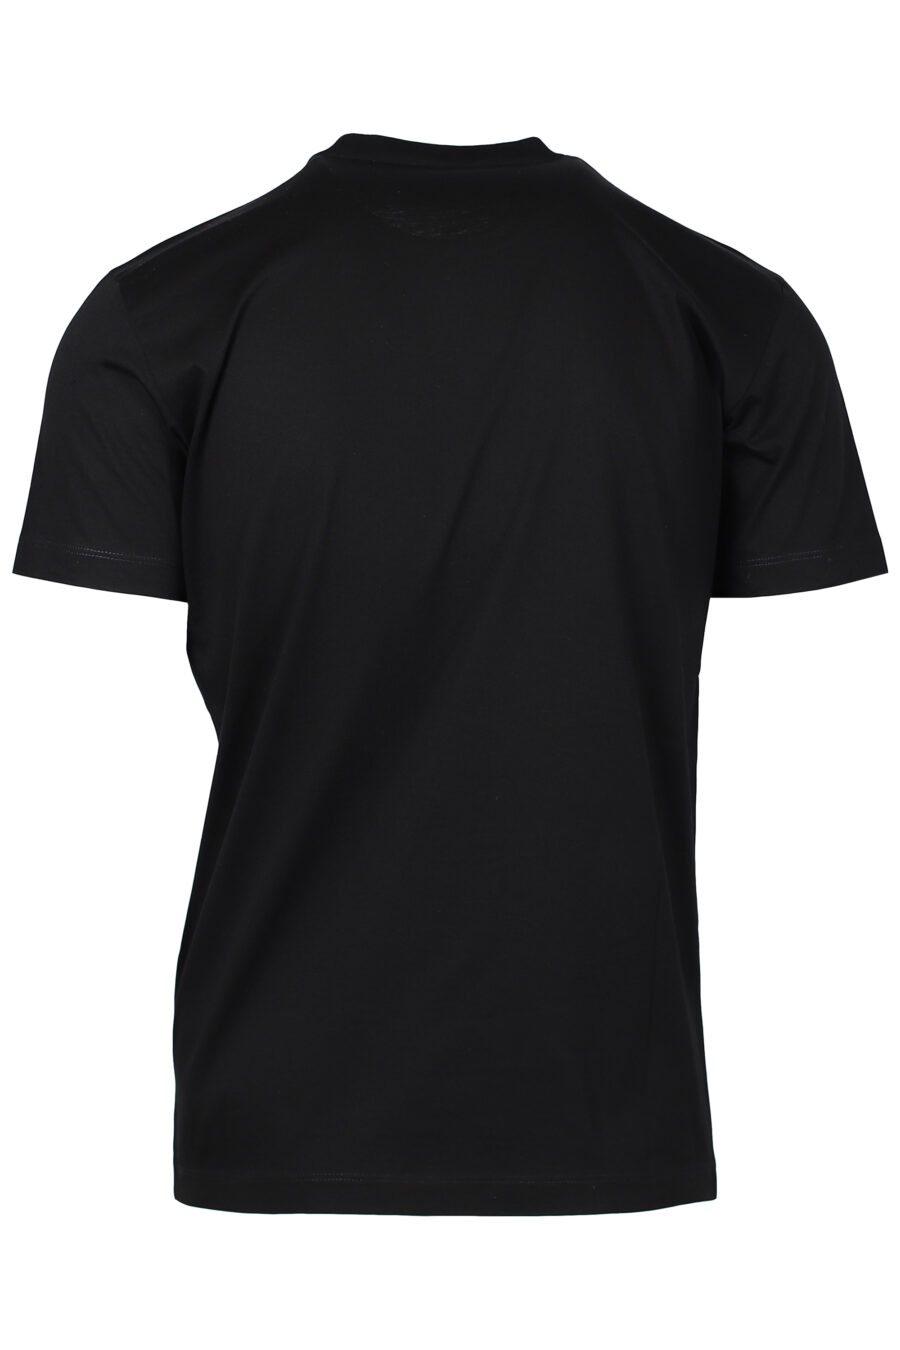 Camiseta negra con doble logo "icon" en spray - IMG 2230